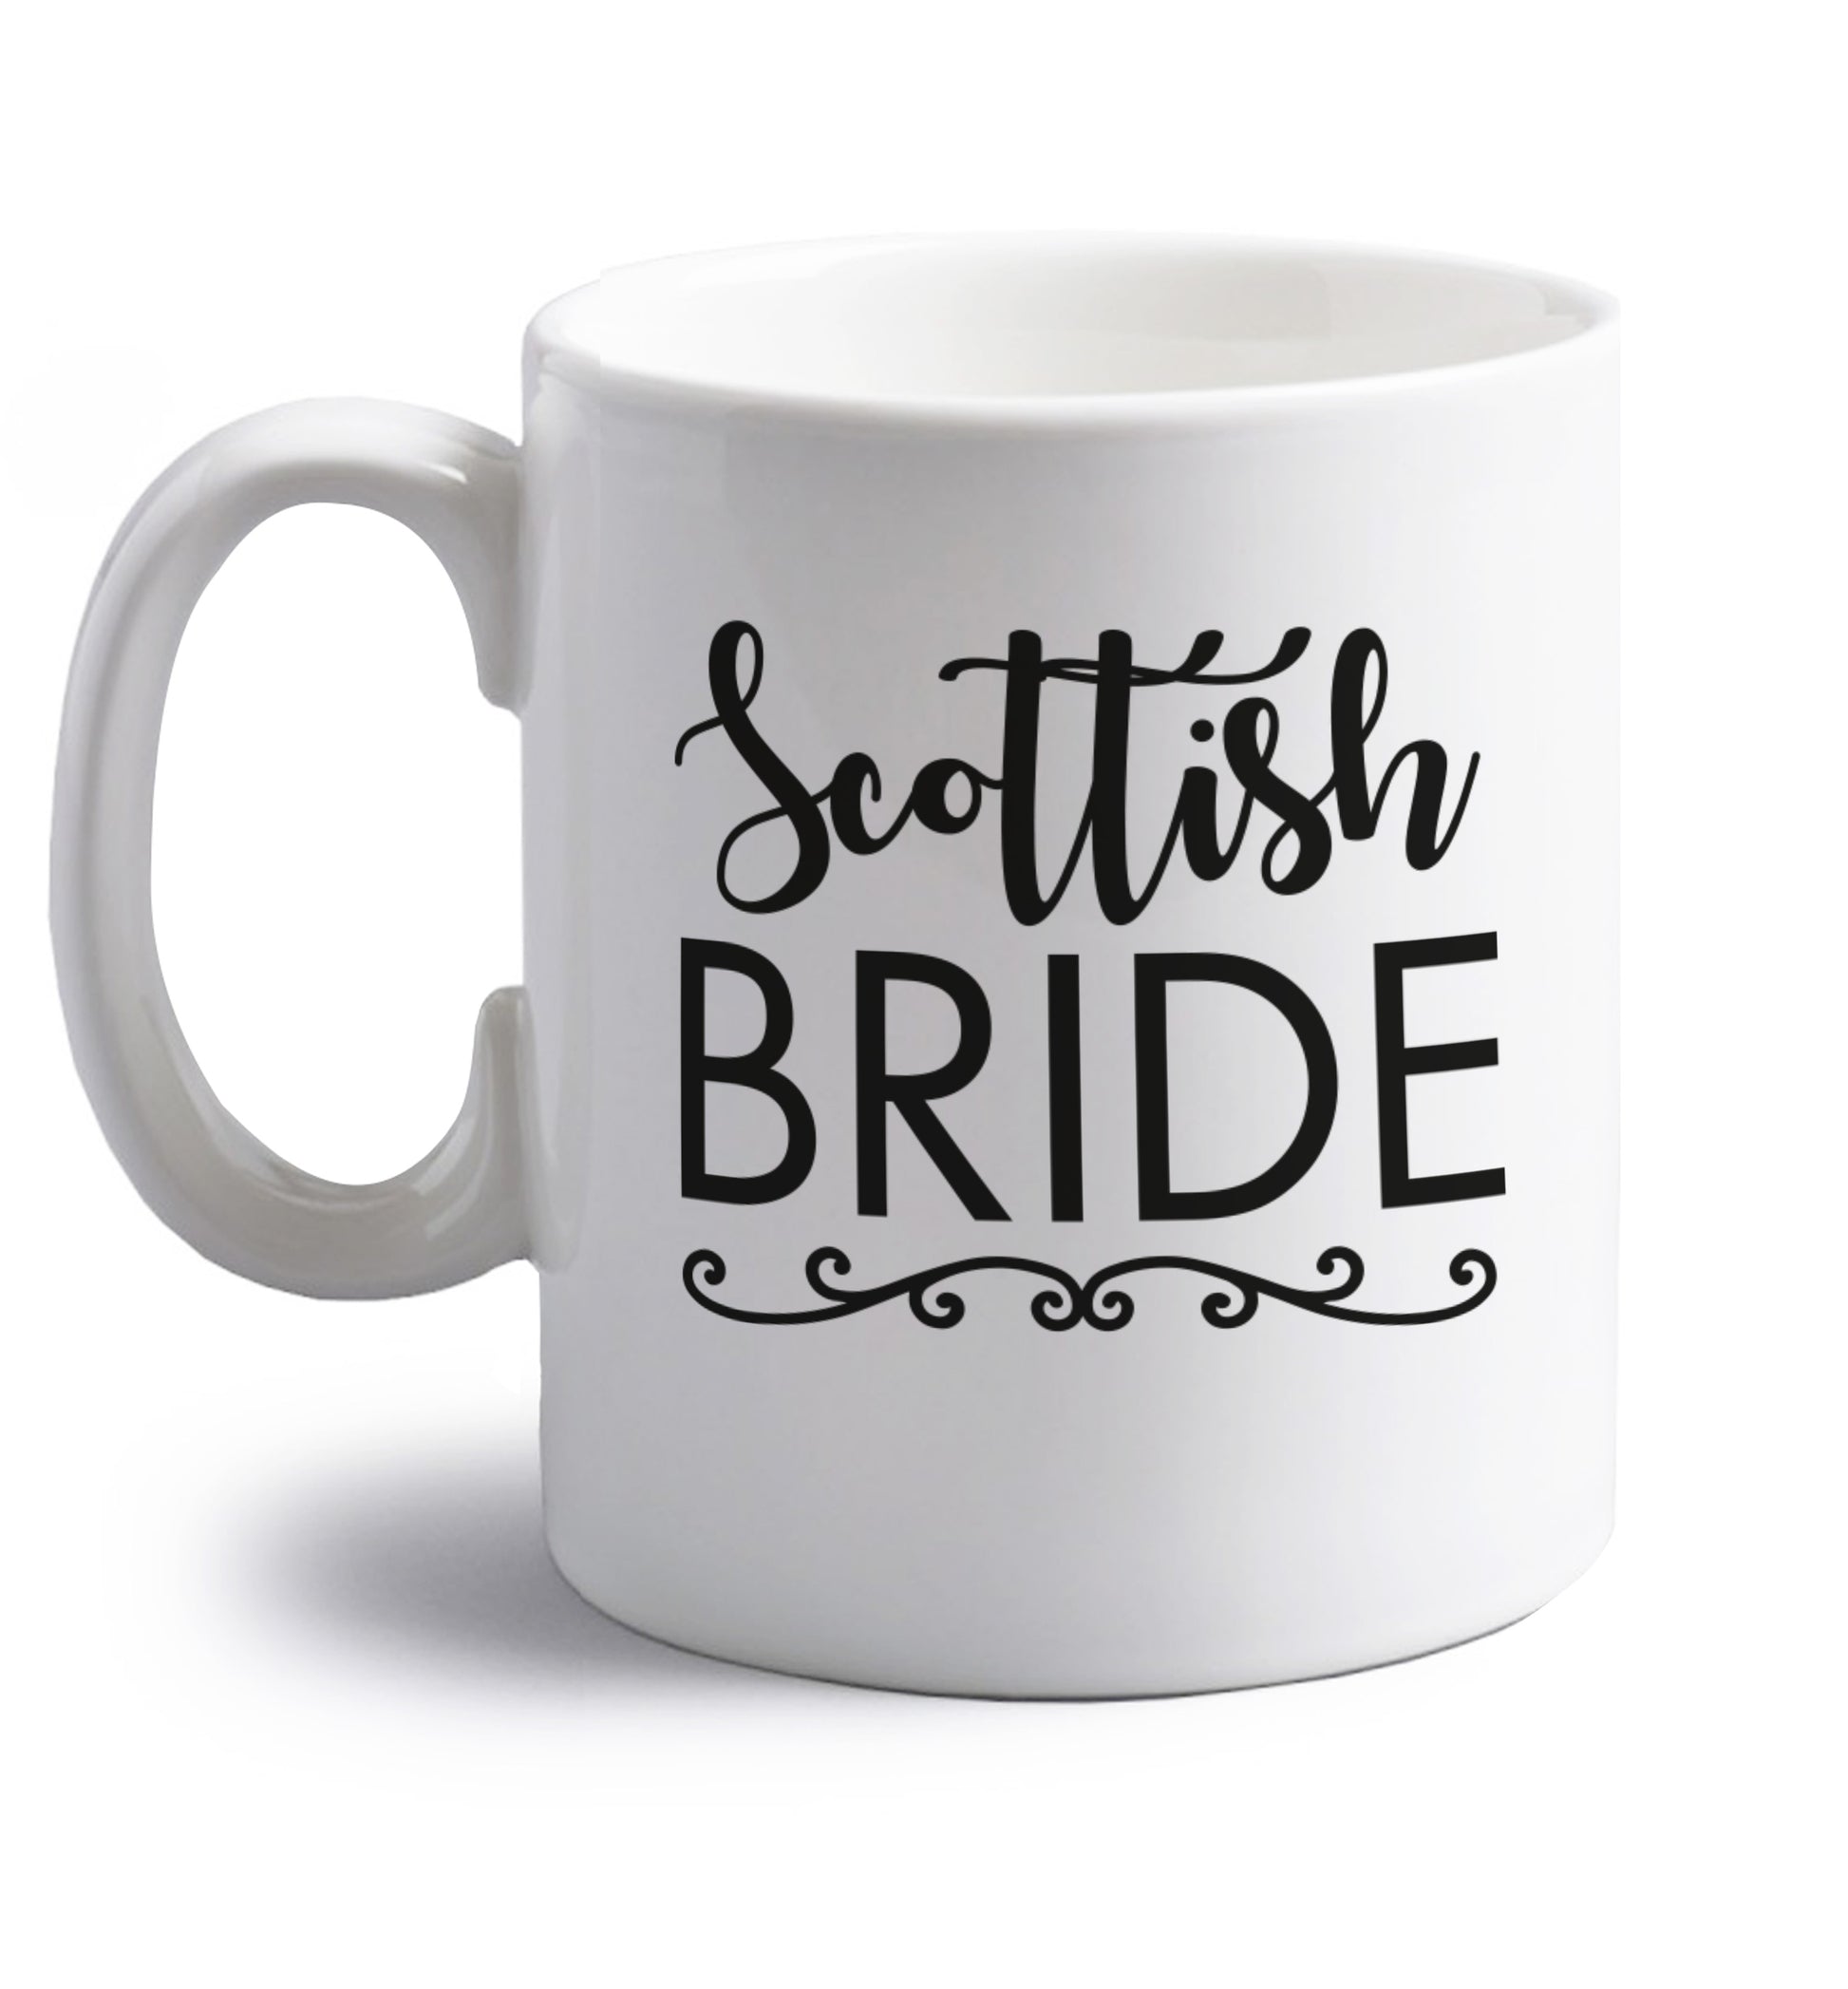 Scottish Bride right handed white ceramic mug 